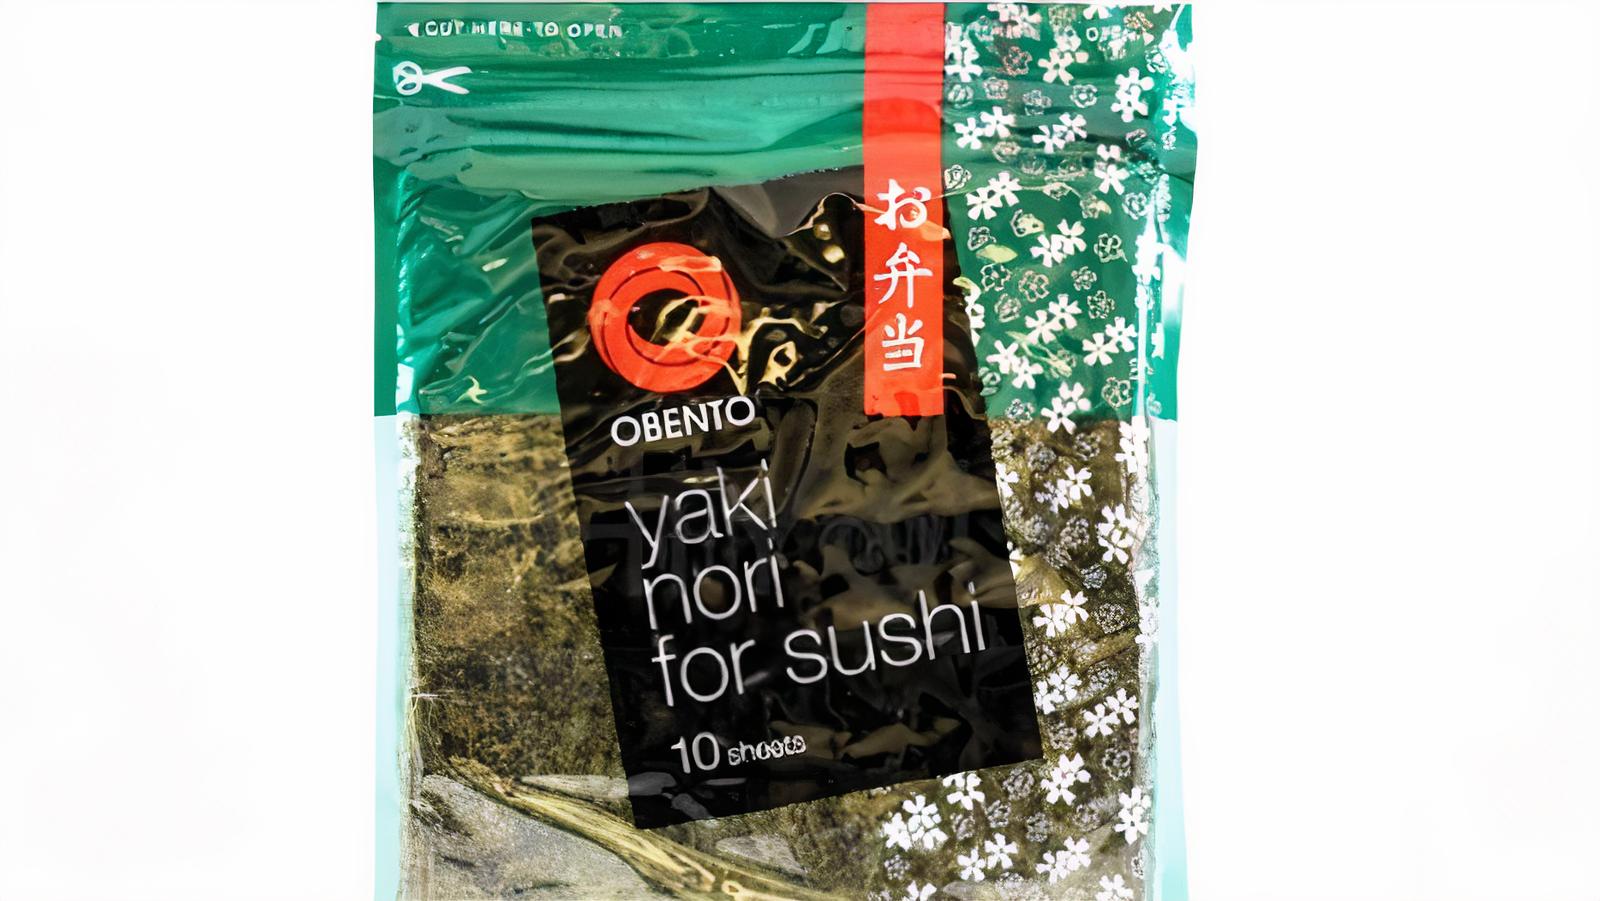 Hm Yaki Sushi Nori (10 Sheets)